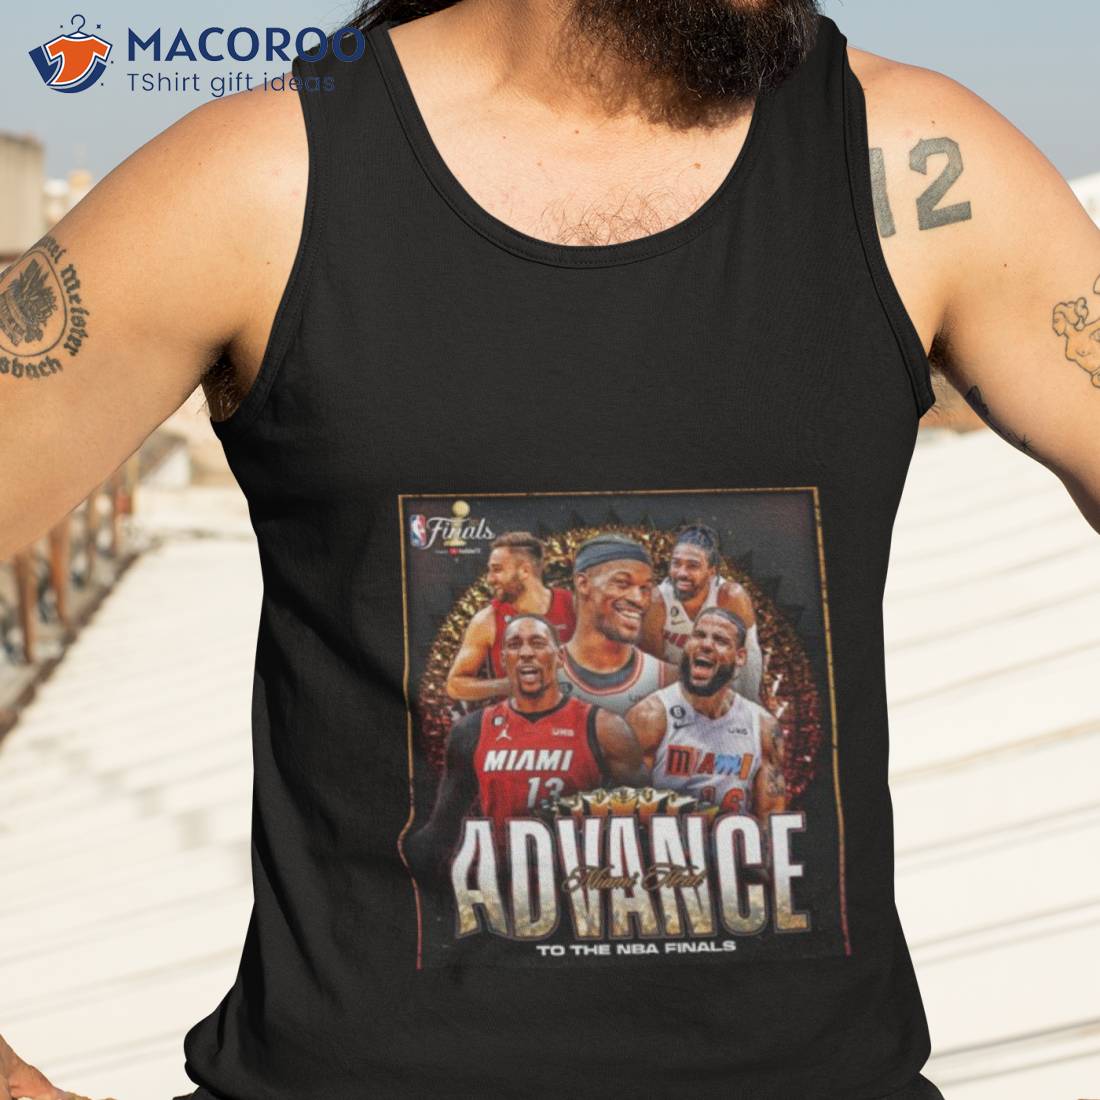 NBA T-shirts, Basketball Apparel, Jerseys, tank tops